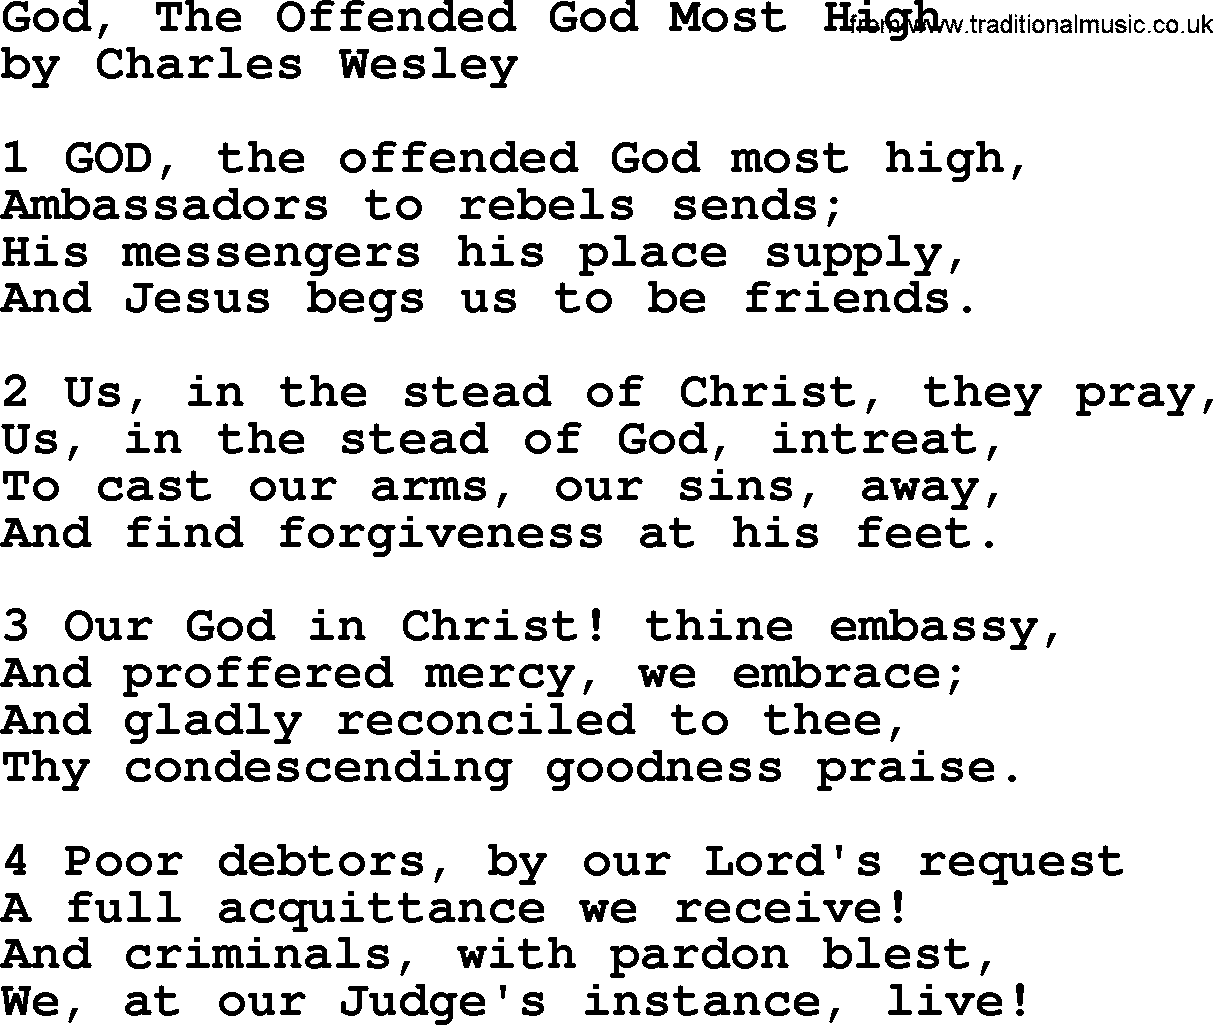 Charles Wesley hymn: God, The Offended God Most High, lyrics